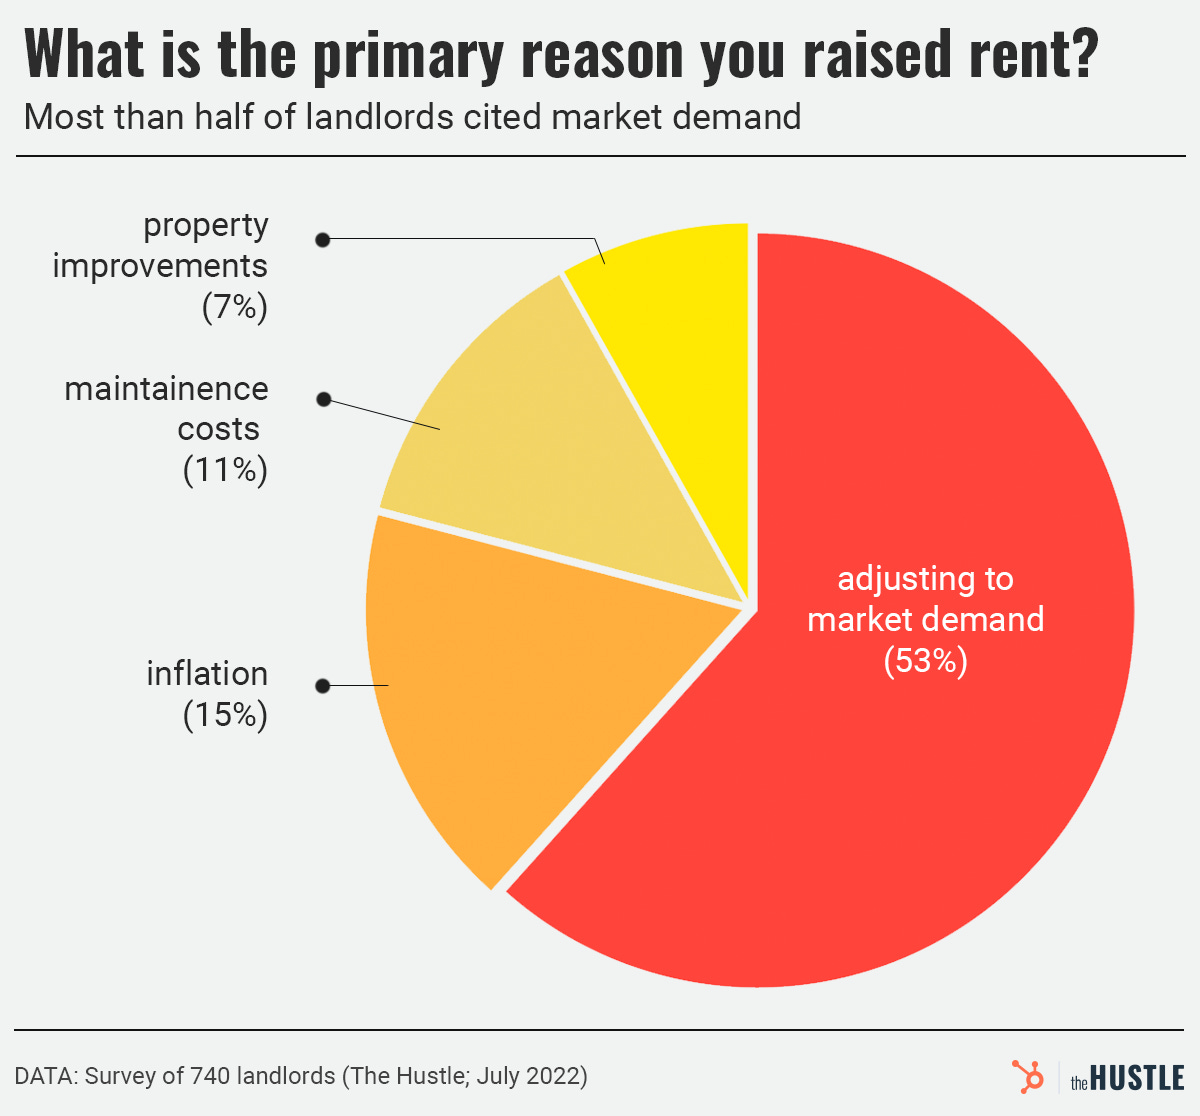 reason for raising rent